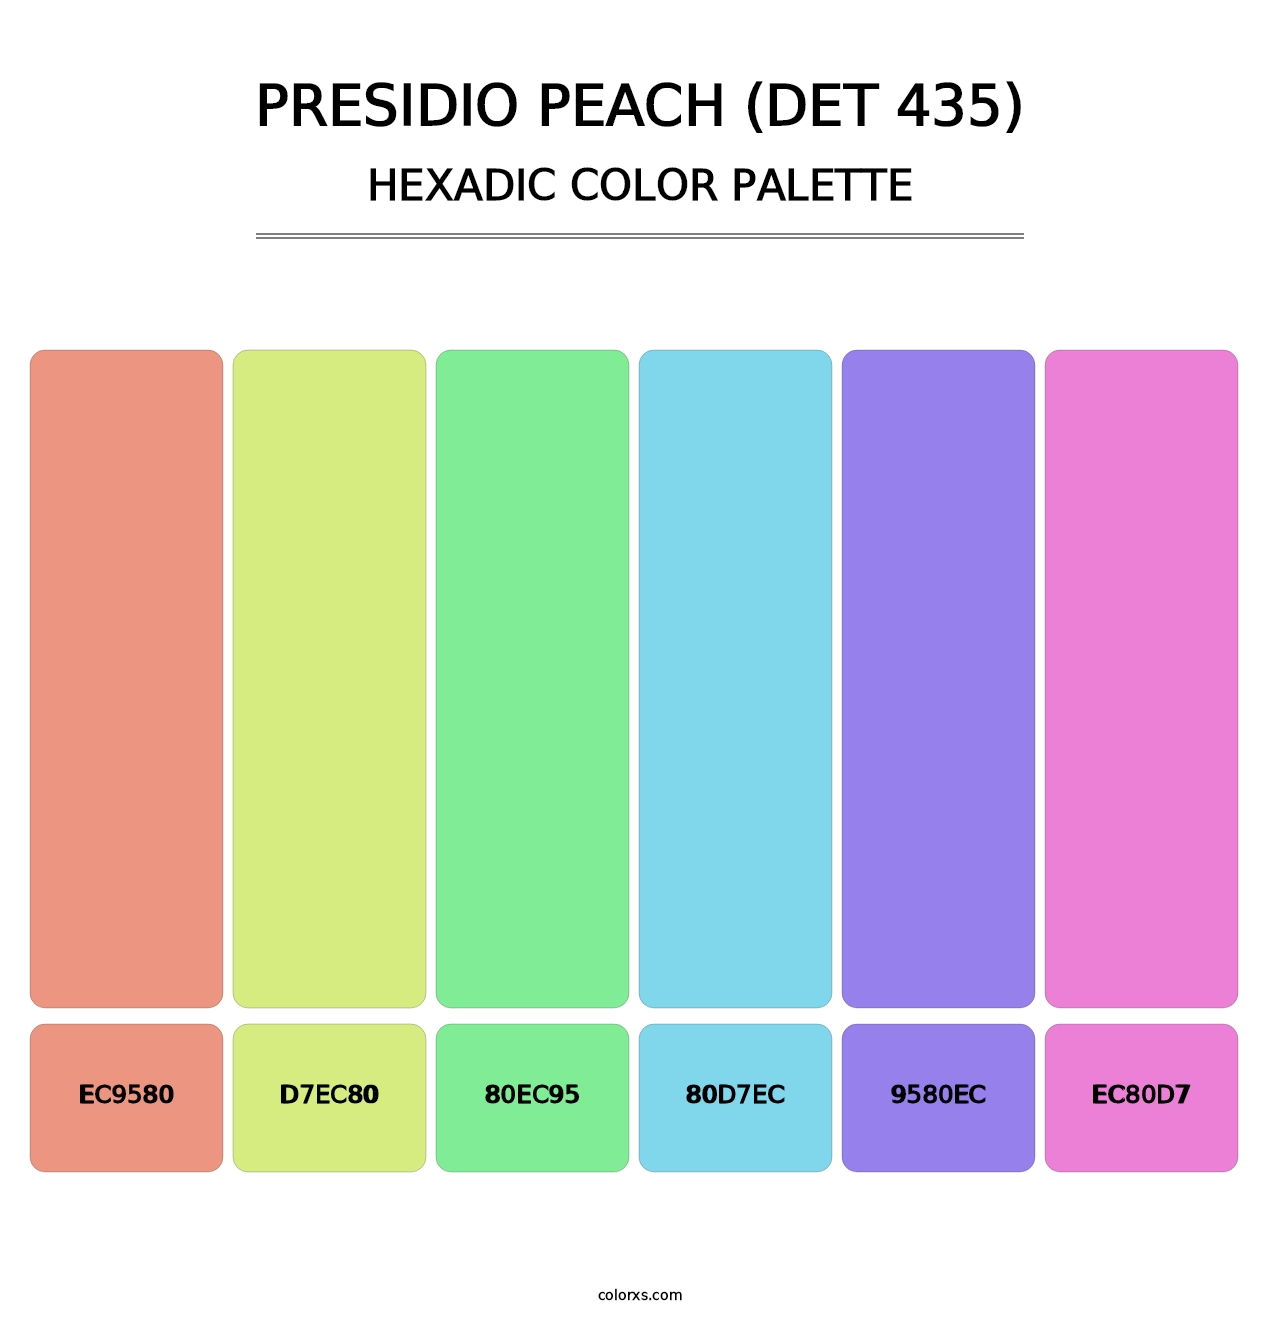 Presidio Peach (DET 435) - Hexadic Color Palette